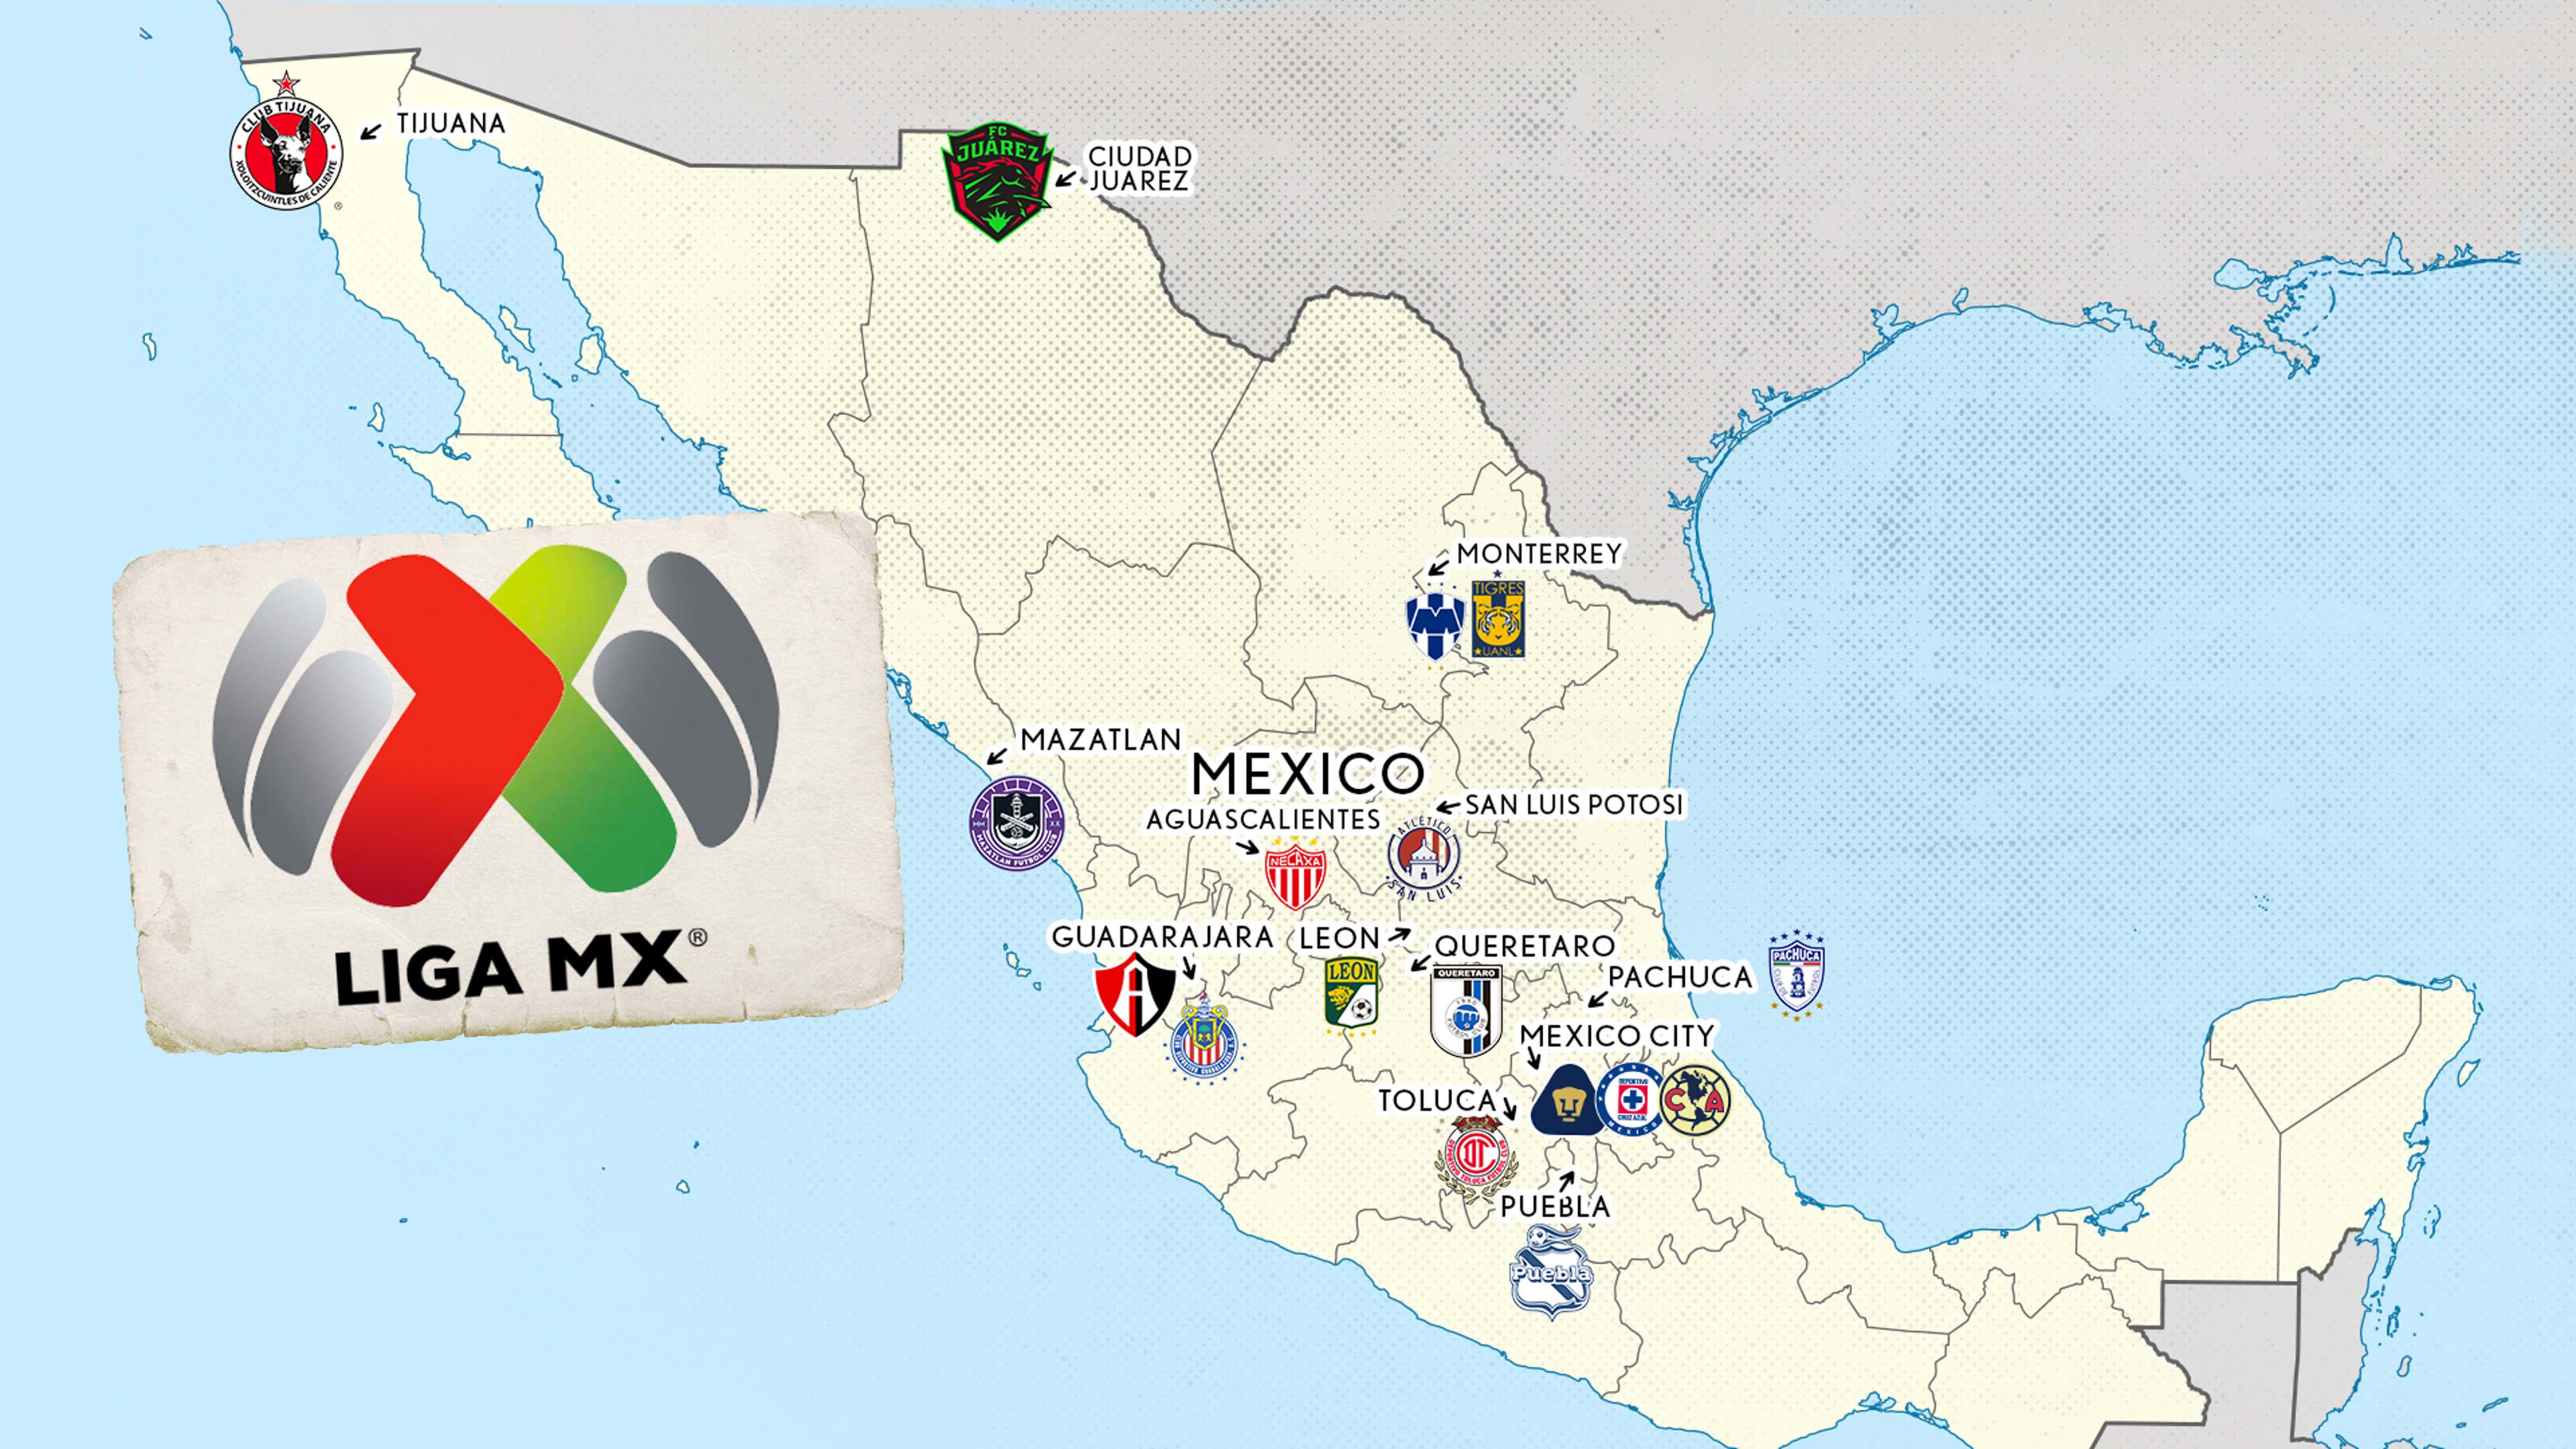 Liga MX Map locations